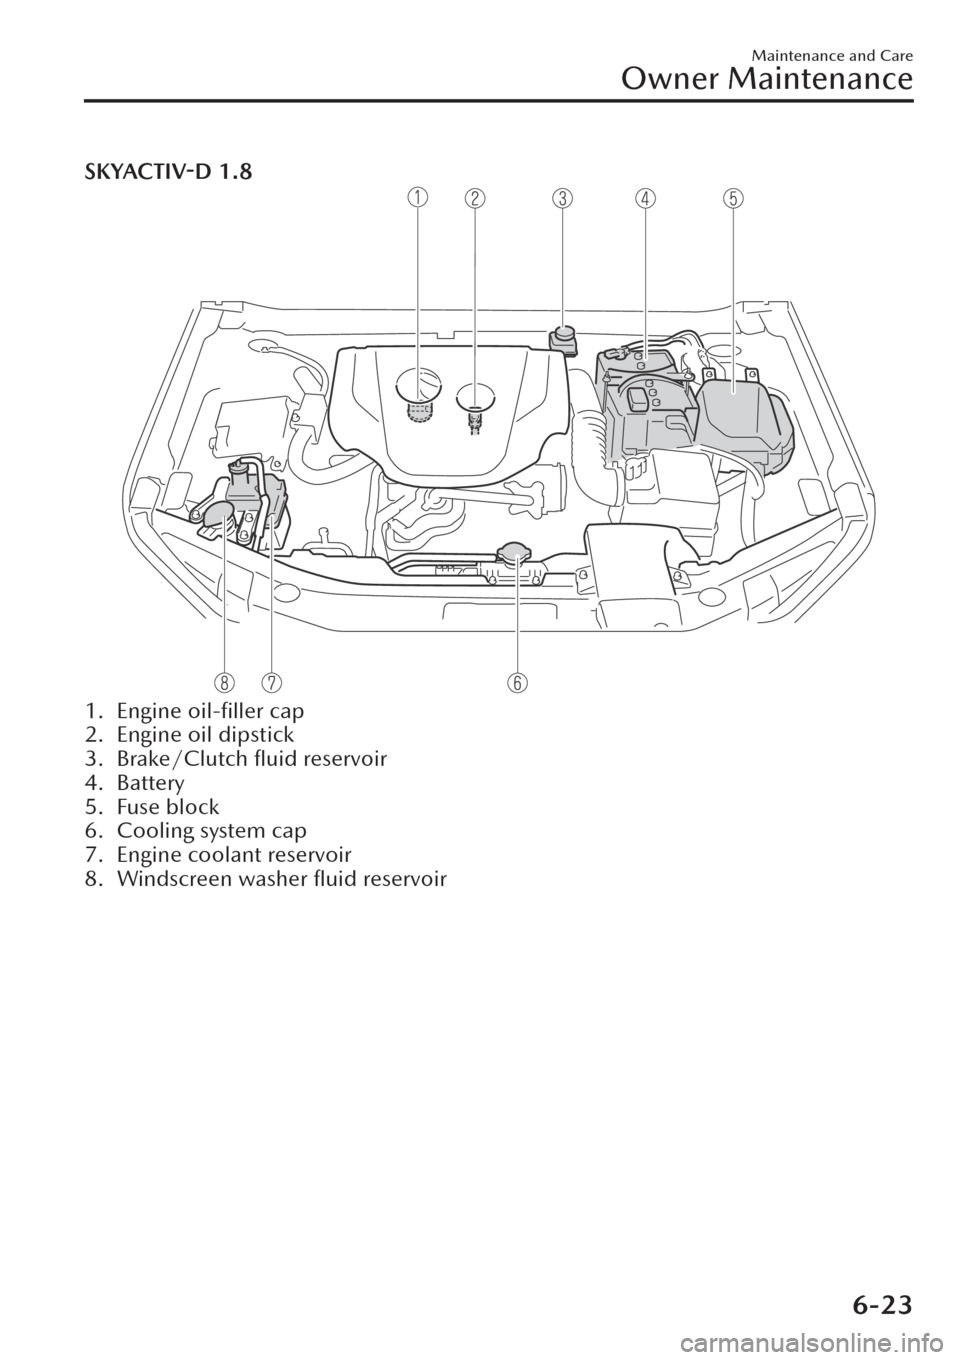 MAZDA MODEL CX-30 2019  Owners Manual (in English) SKYACTIV-D 1.8
1. Engine oil-ﬁller cap
2. Engine oil dipstick
3. Brake/Clutch ﬂuid reservoir
4. Battery
5. Fuse block
6. Cooling system cap
7. Engine coolant reservoir
8. Windscreen washer ﬂuid 